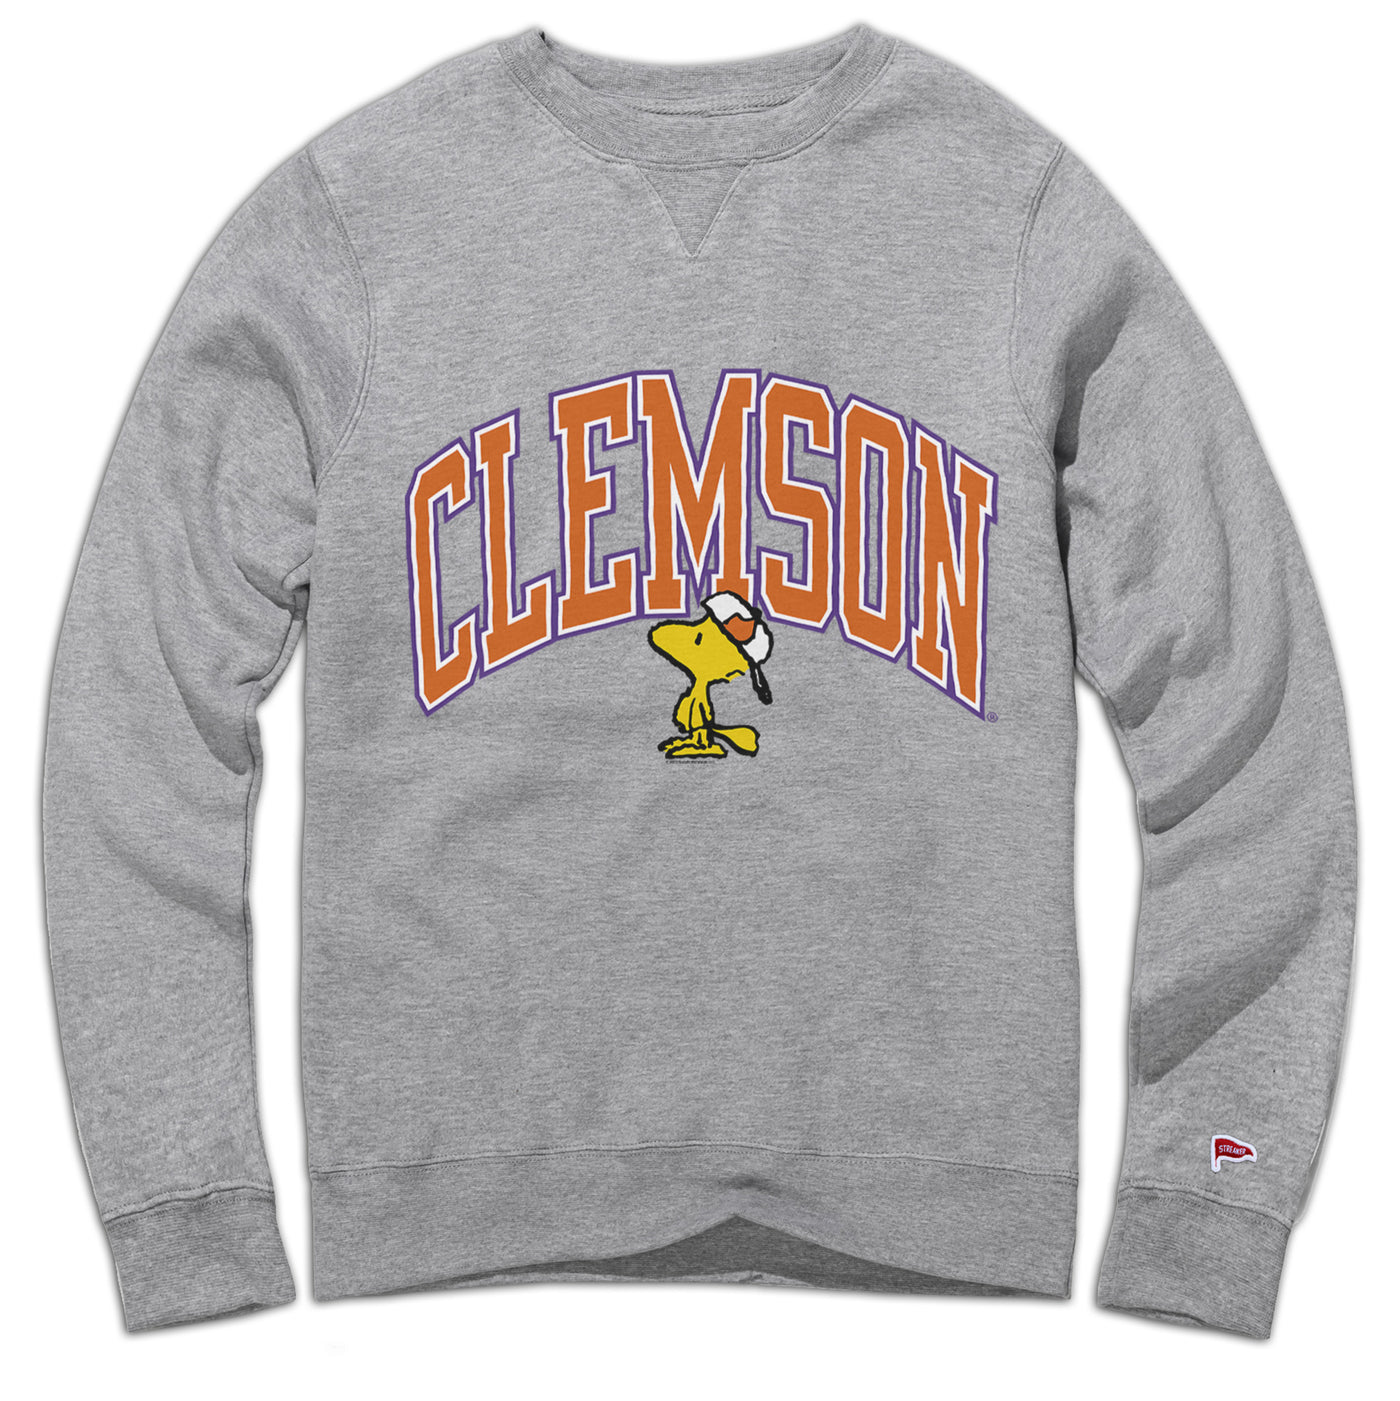 Peanuts x Clemson Woodstock Crewneck Sweatshirt - Streaker Sports